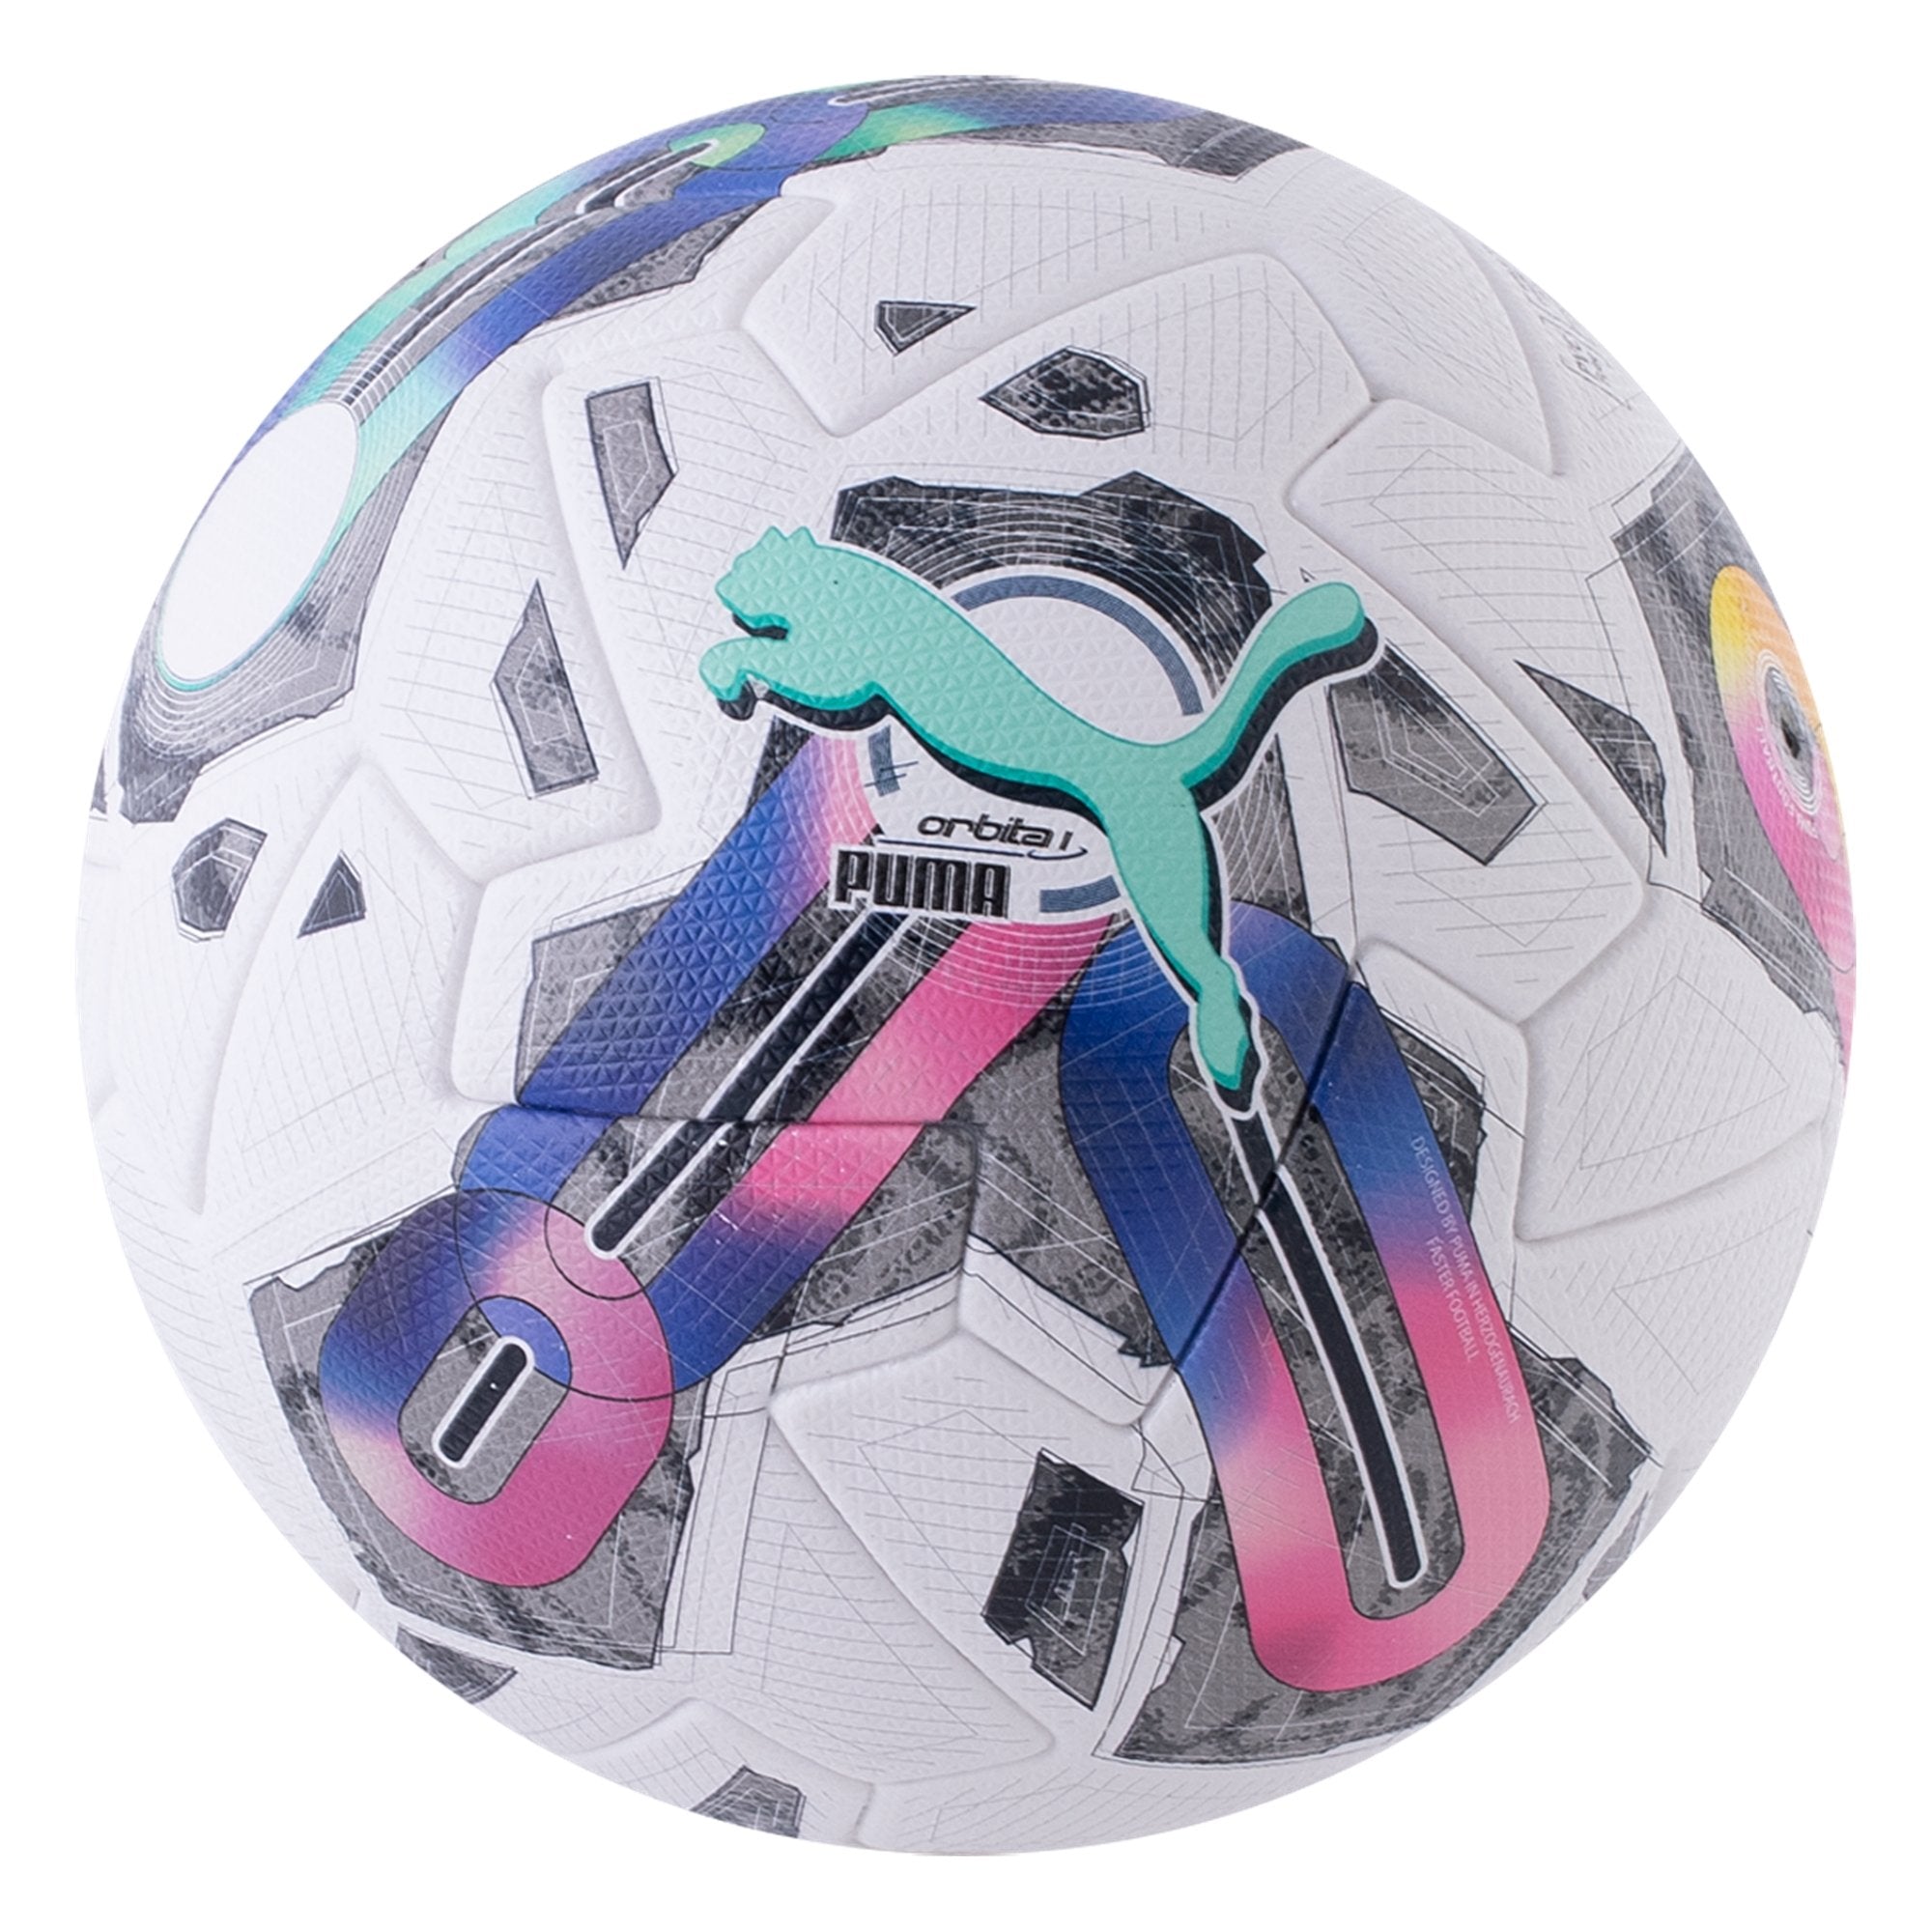 Puma Orbita 1 Thermabond Match Soccer Ball - White/Multicolor